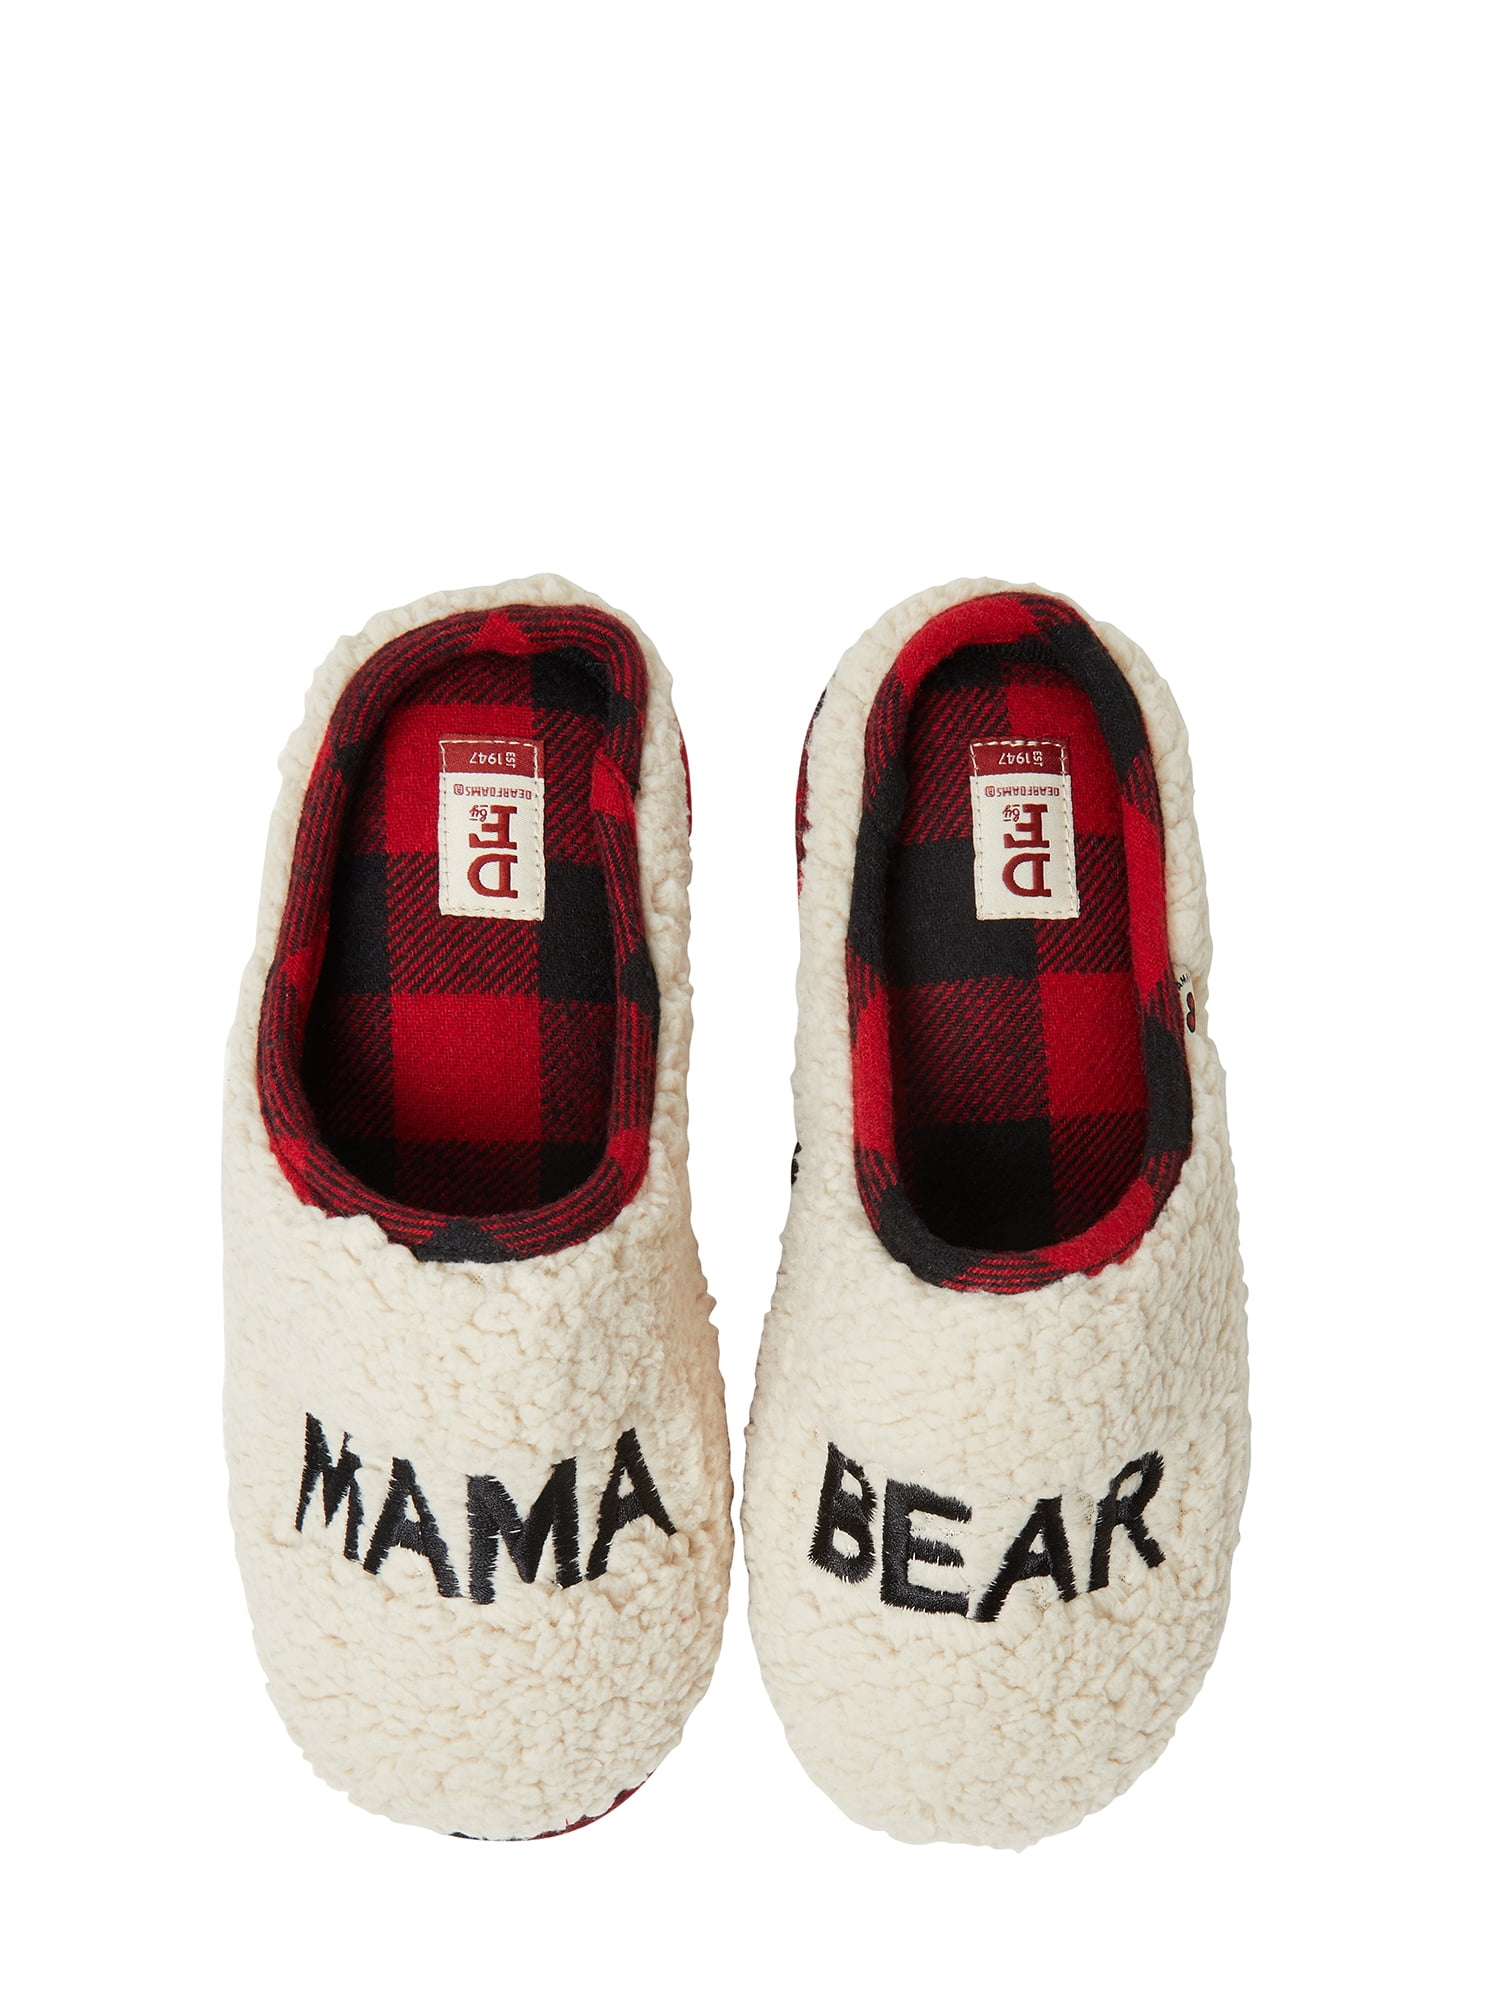 mama bear house shoes walmart